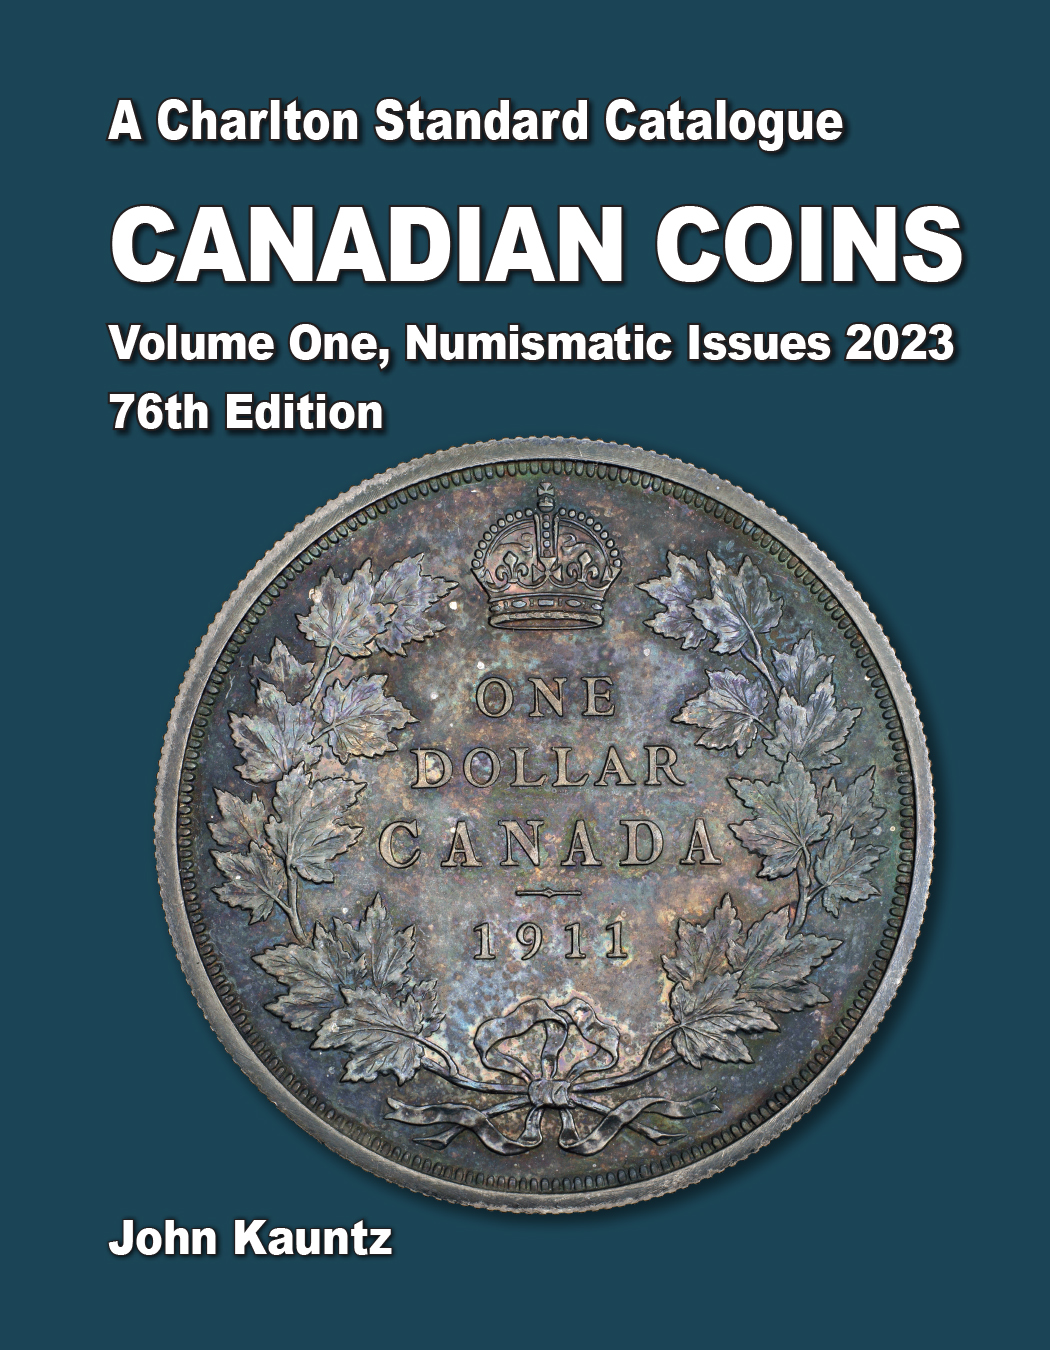 Cdn-Coins-Vol.1-ENG-2023-Front-cover.jpg